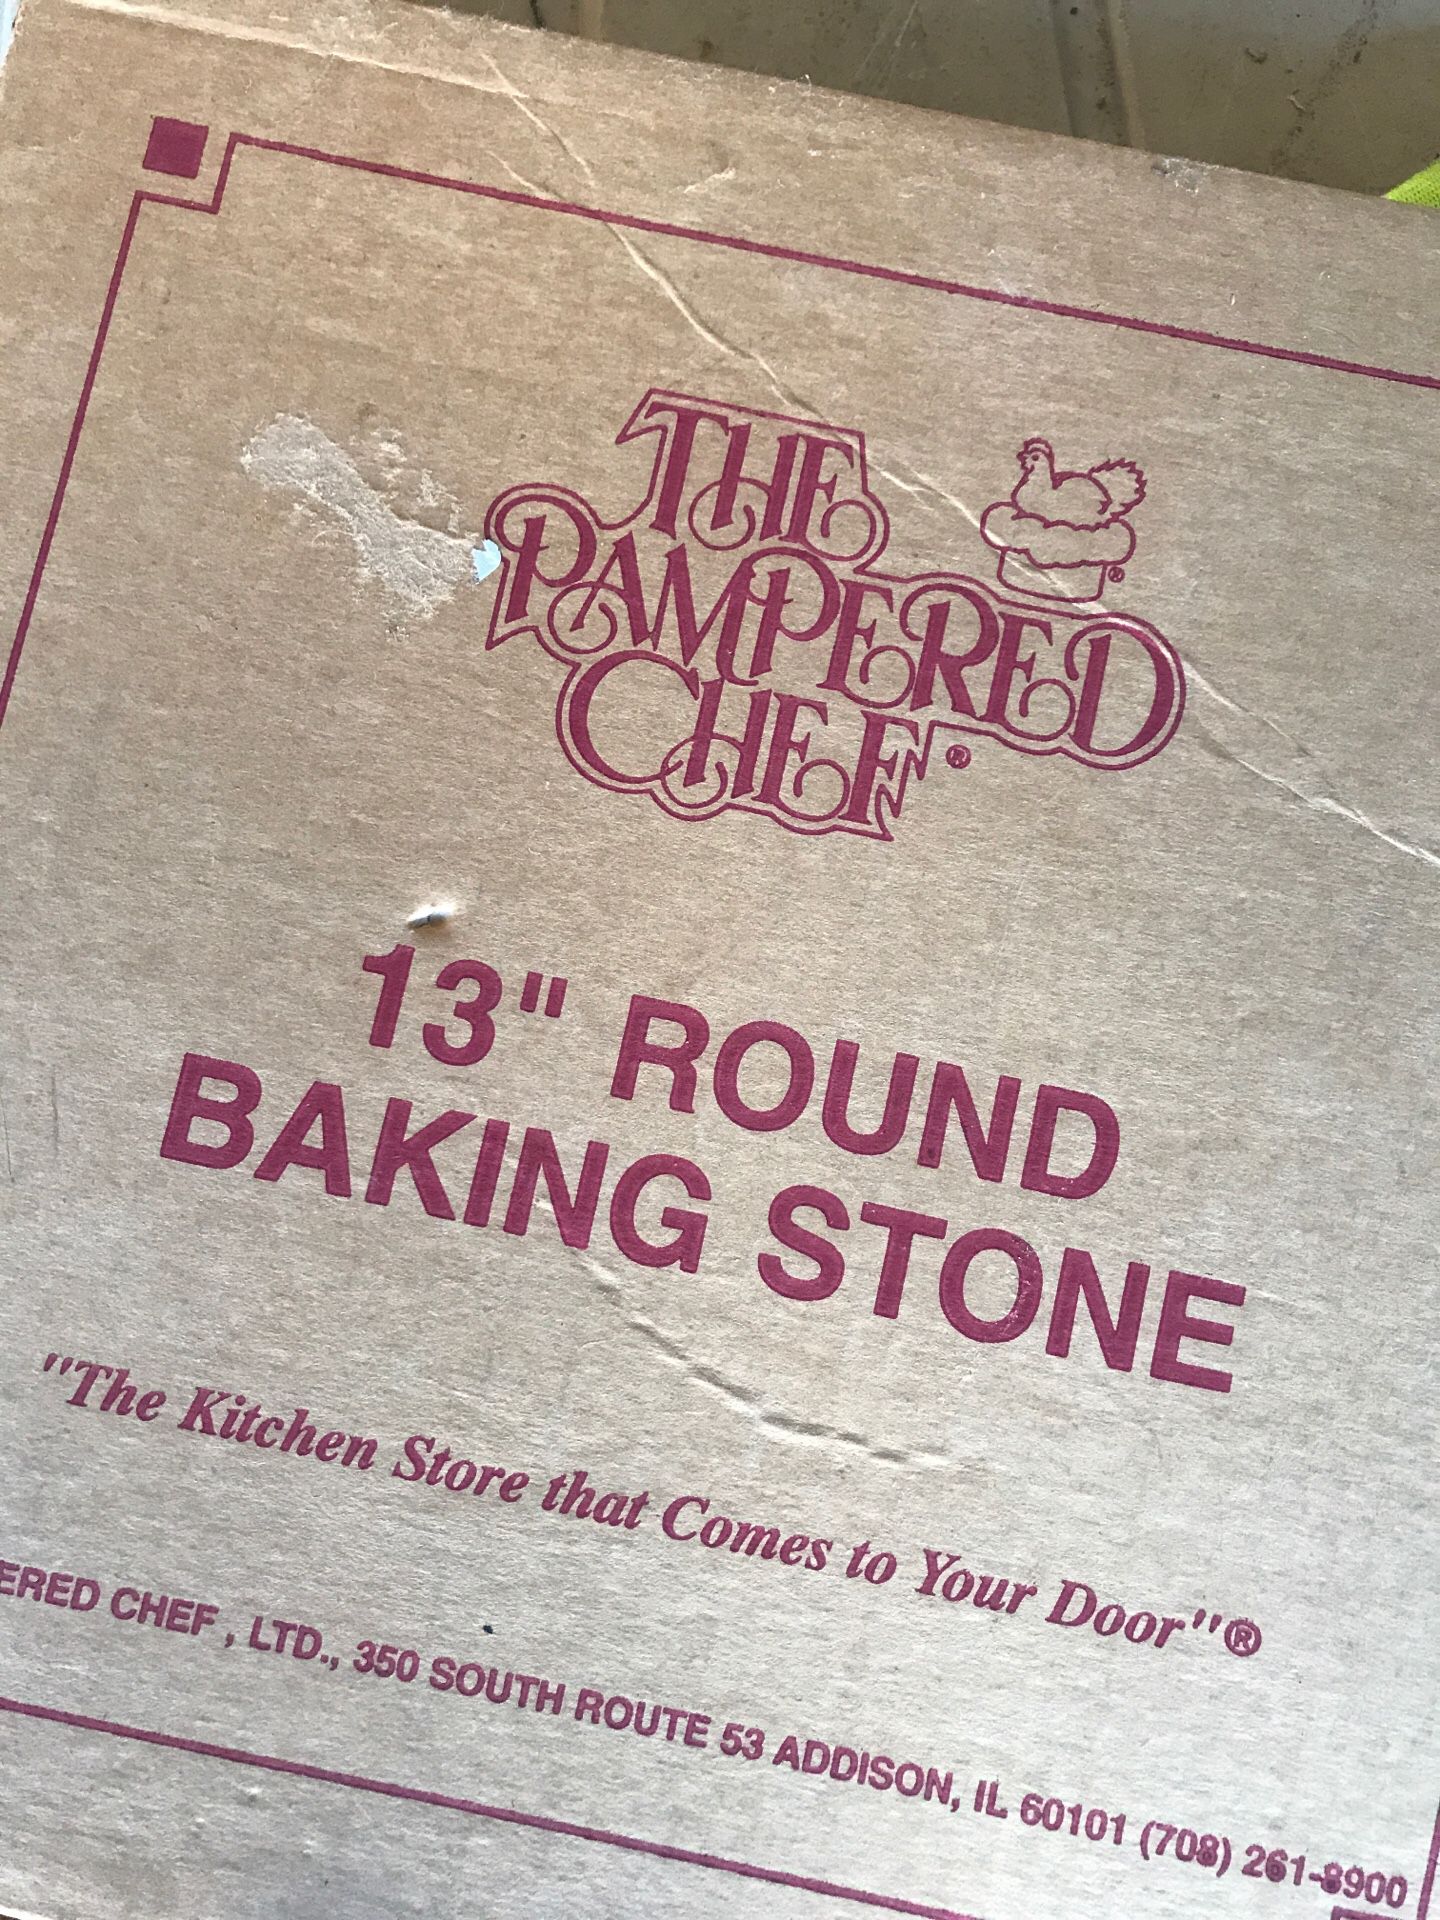 Pampered Chef baking stone